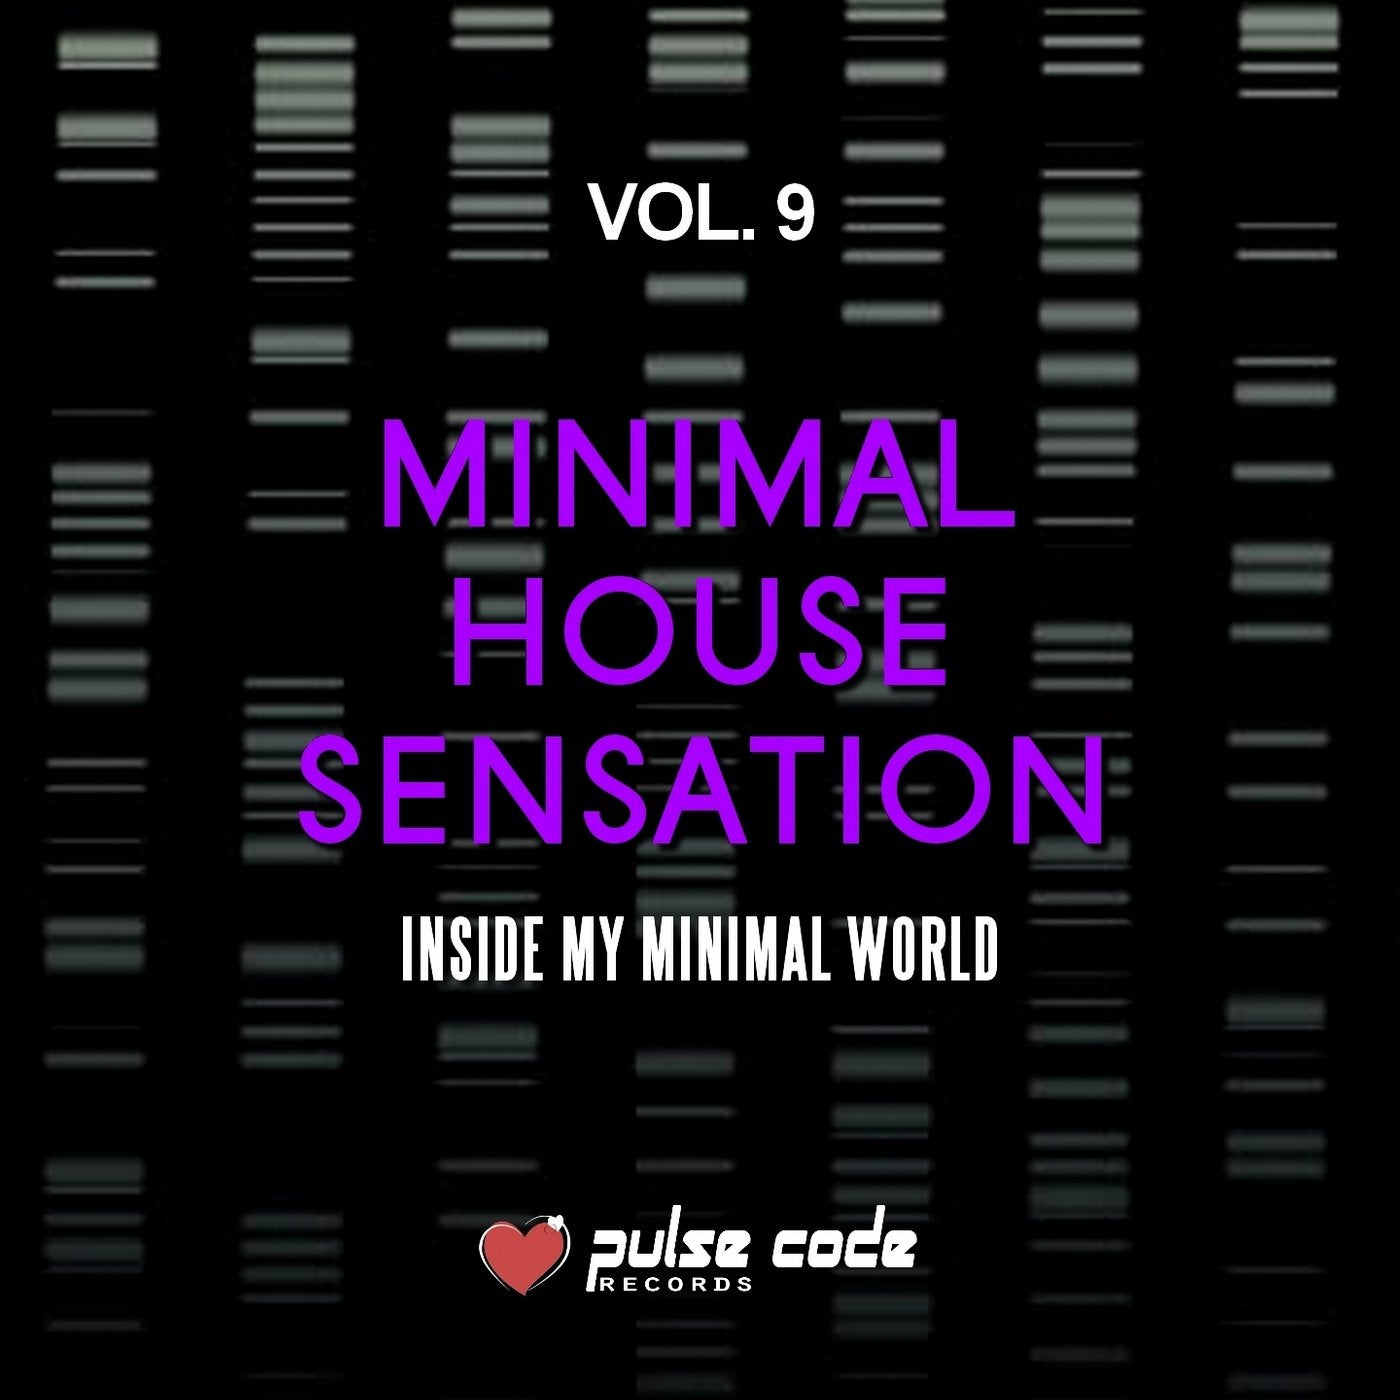 Minimal House Sensation, Vol. 9 (Inside My Minimal World)